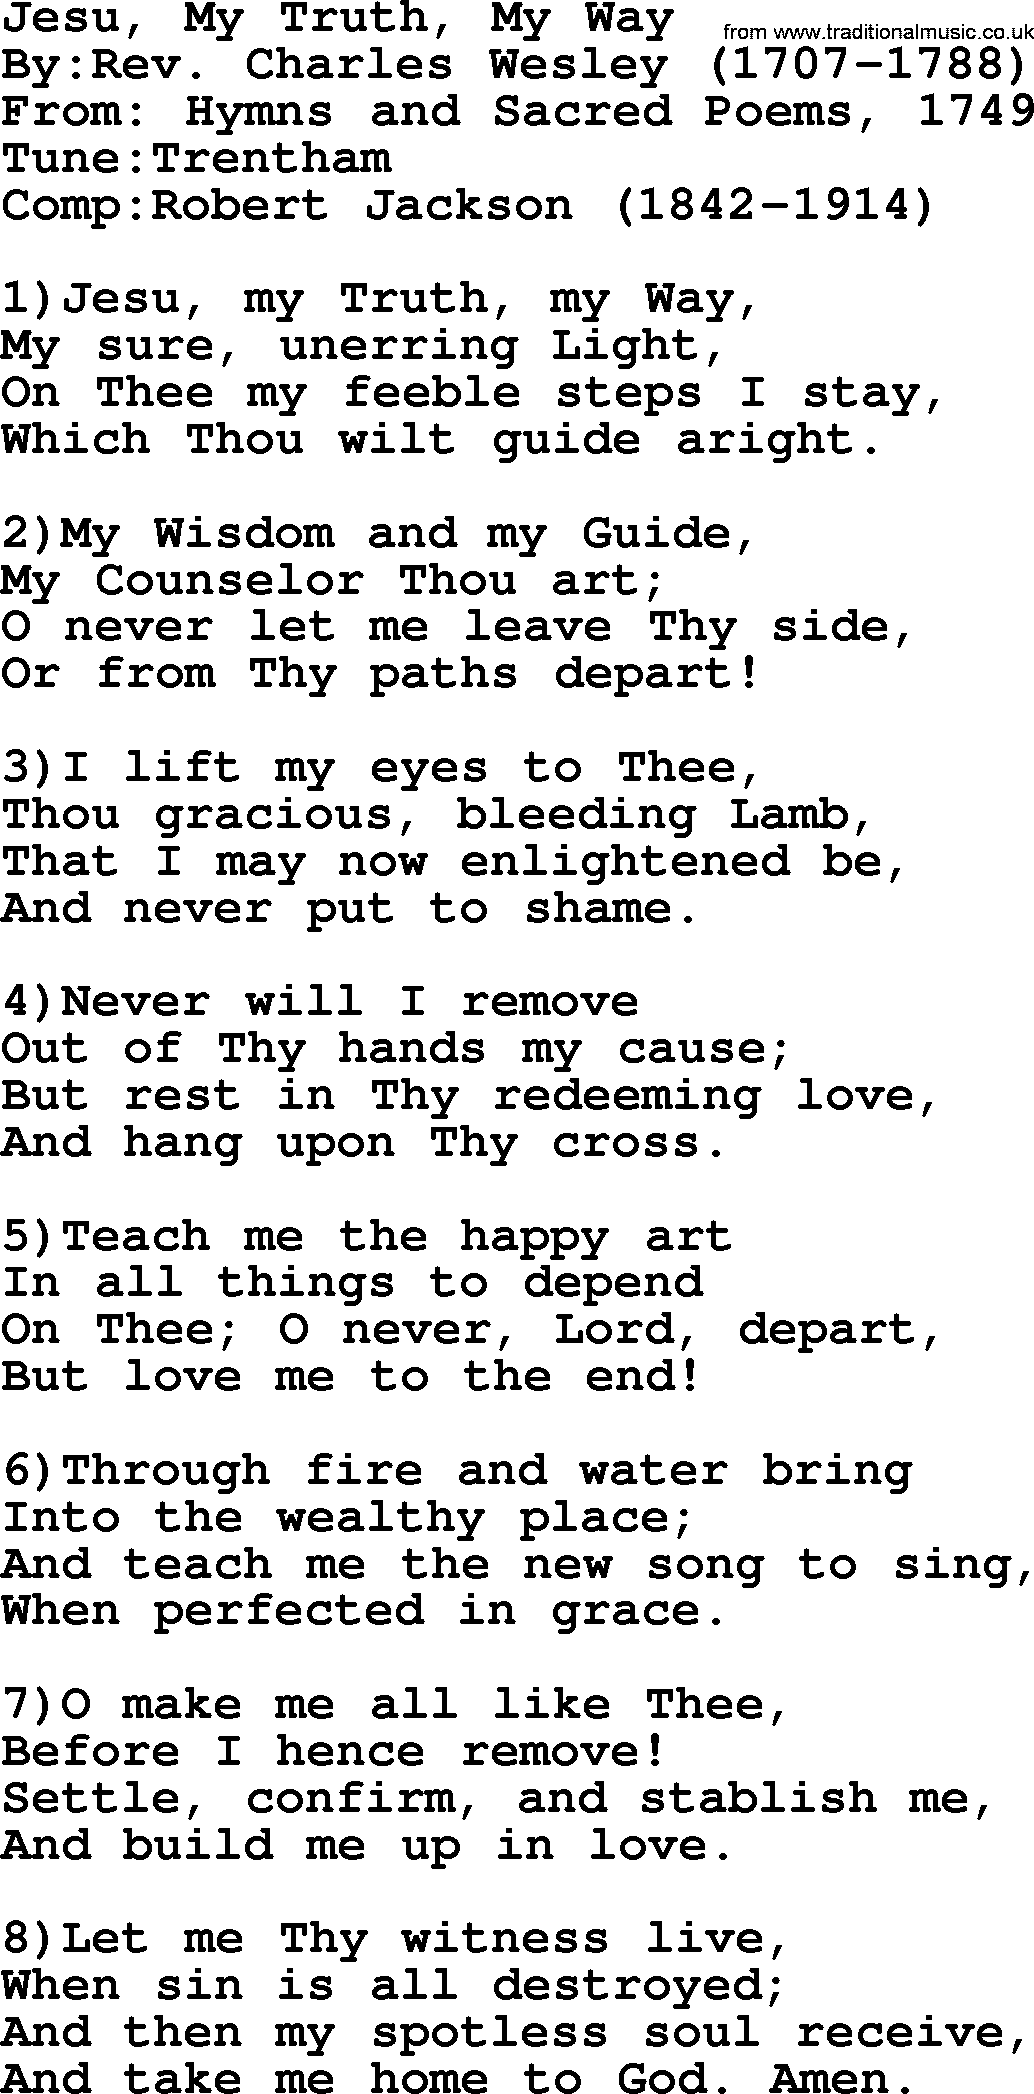 Methodist Hymn: Jesu, My Truth, My Way, lyrics